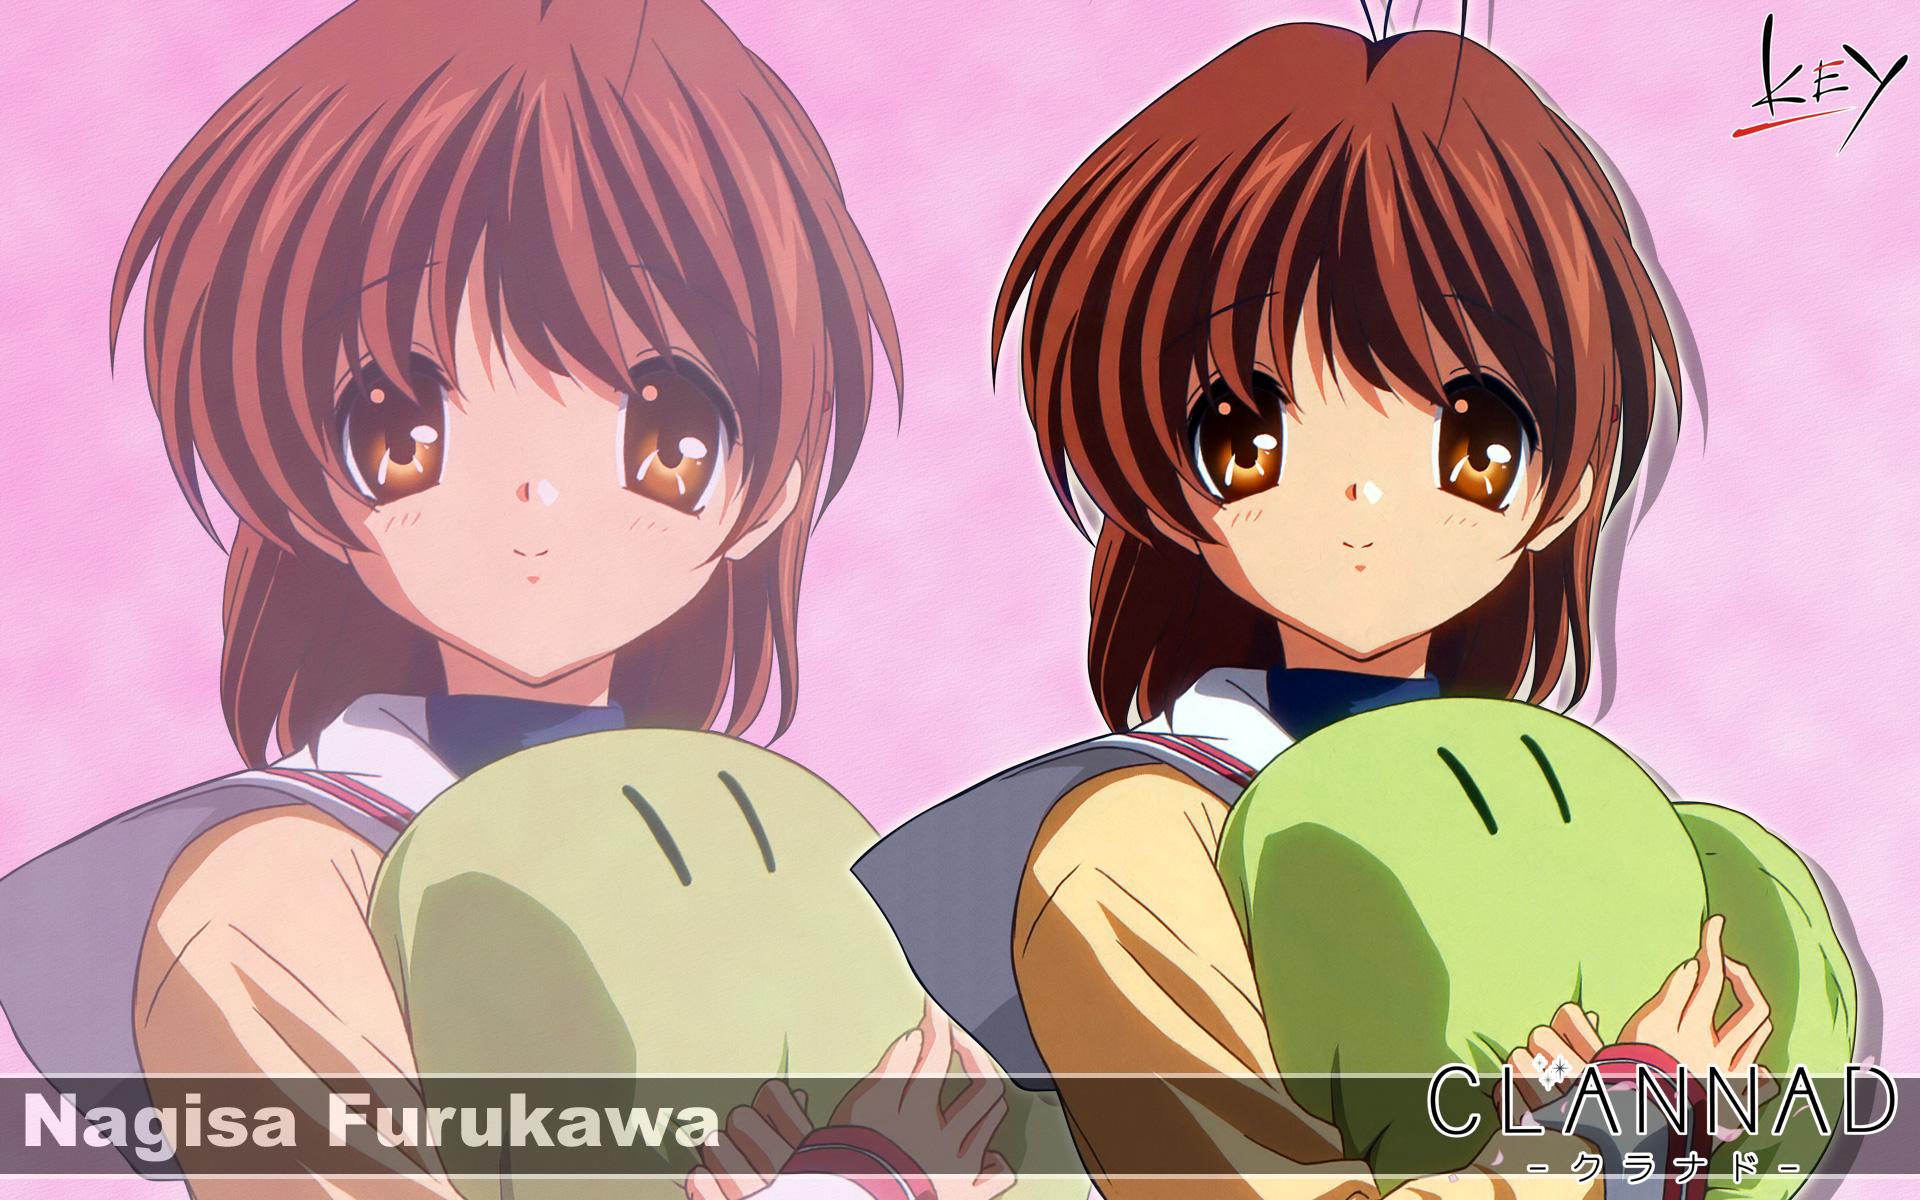 Download wallpaper from anime Clannad with tags: Nagisa Furukawa